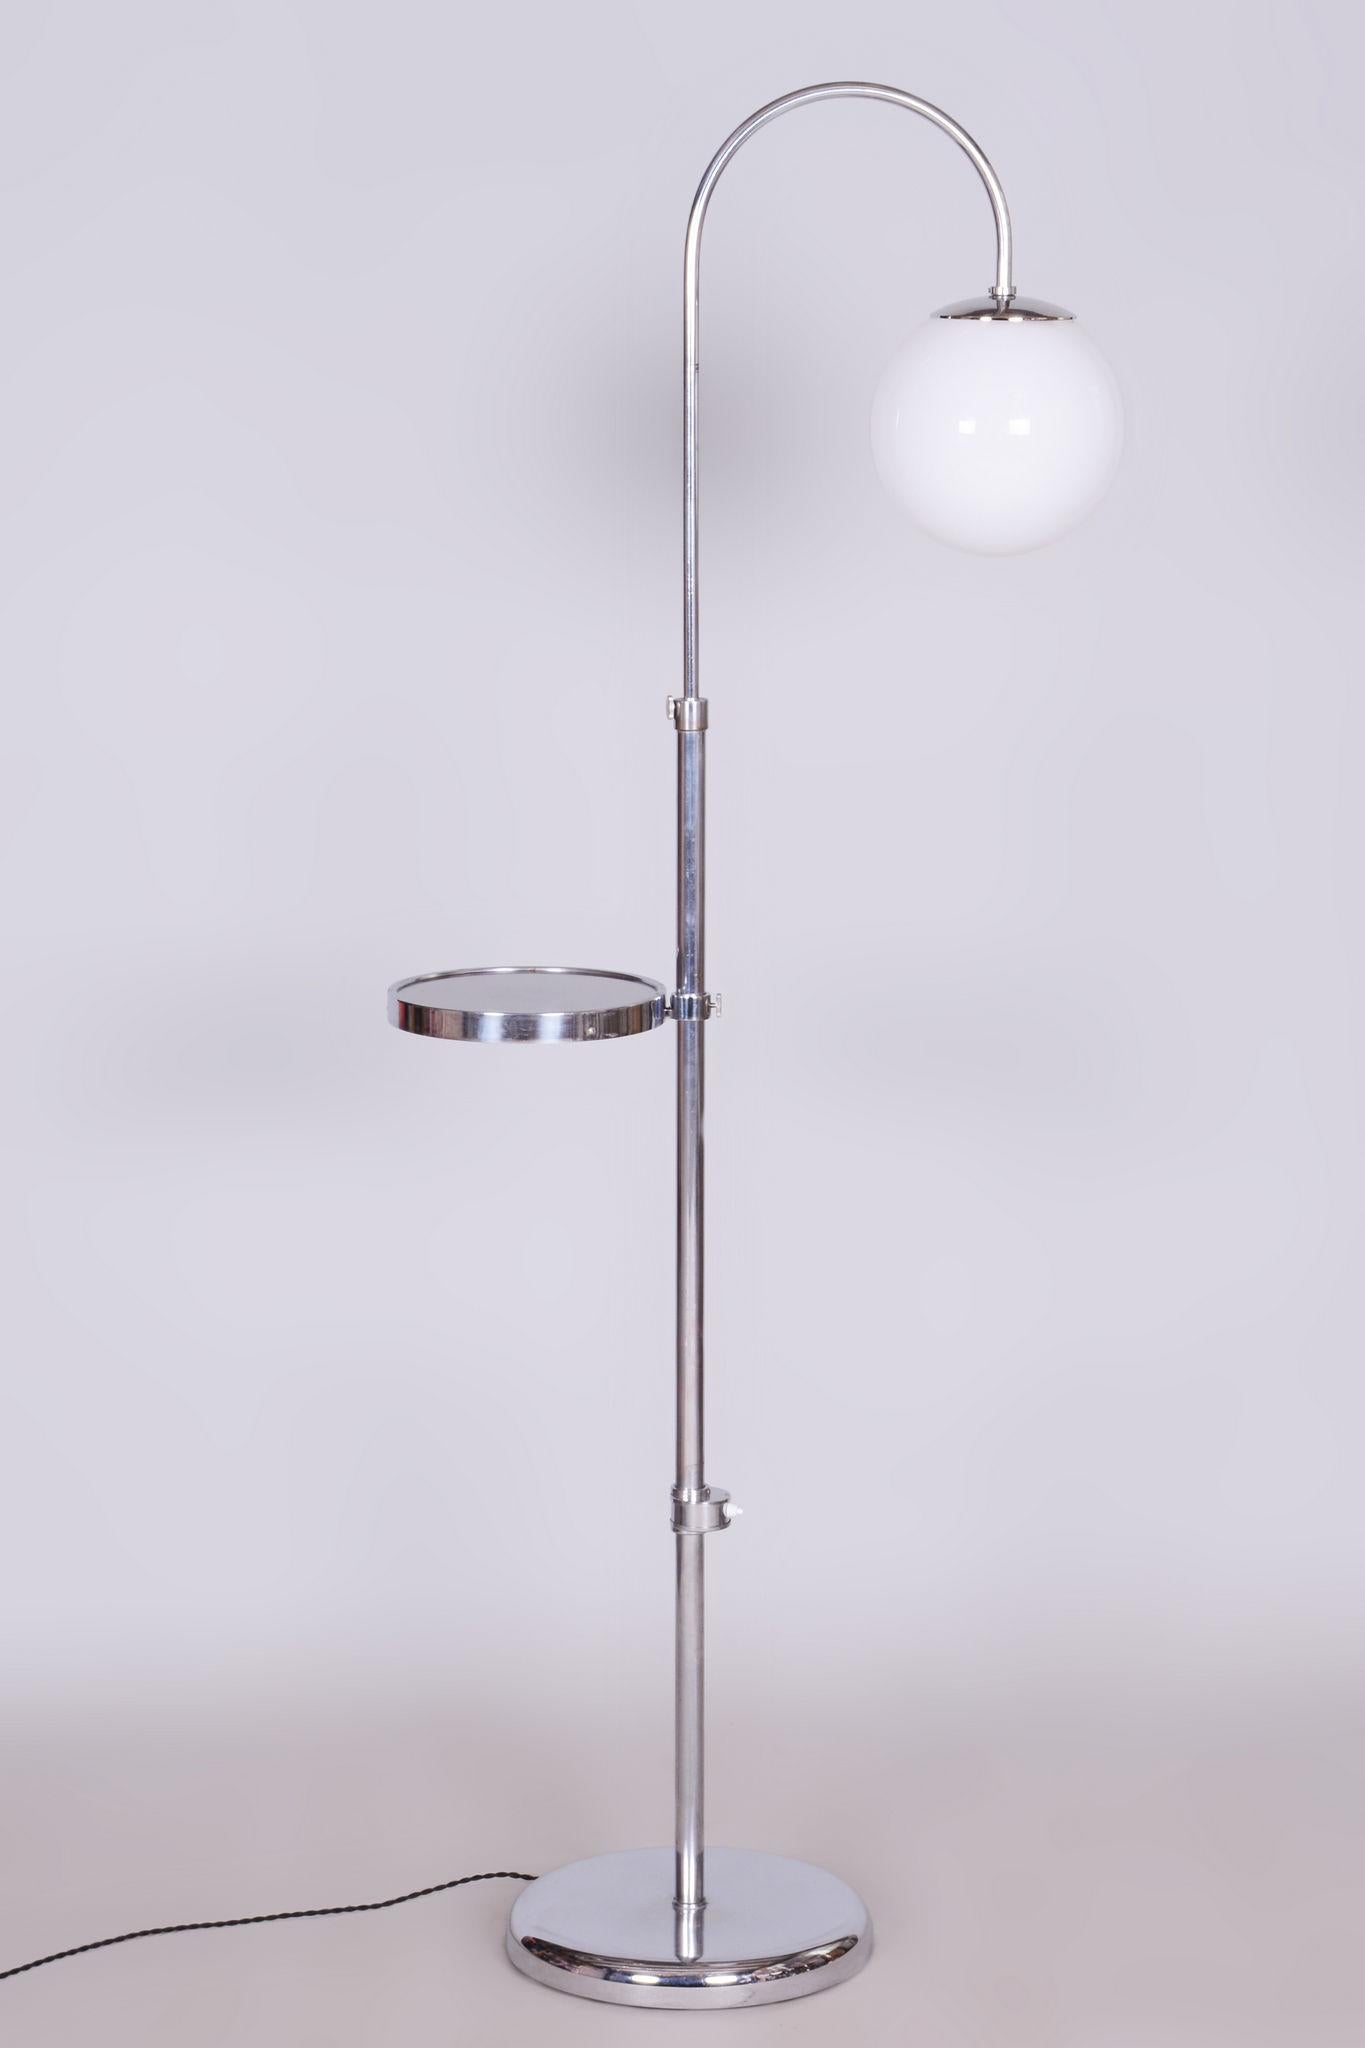 Restored Chrome Floor Lamp, Steel, Milk Glass, Adjustable Height, Czech, 1930s For Sale 2